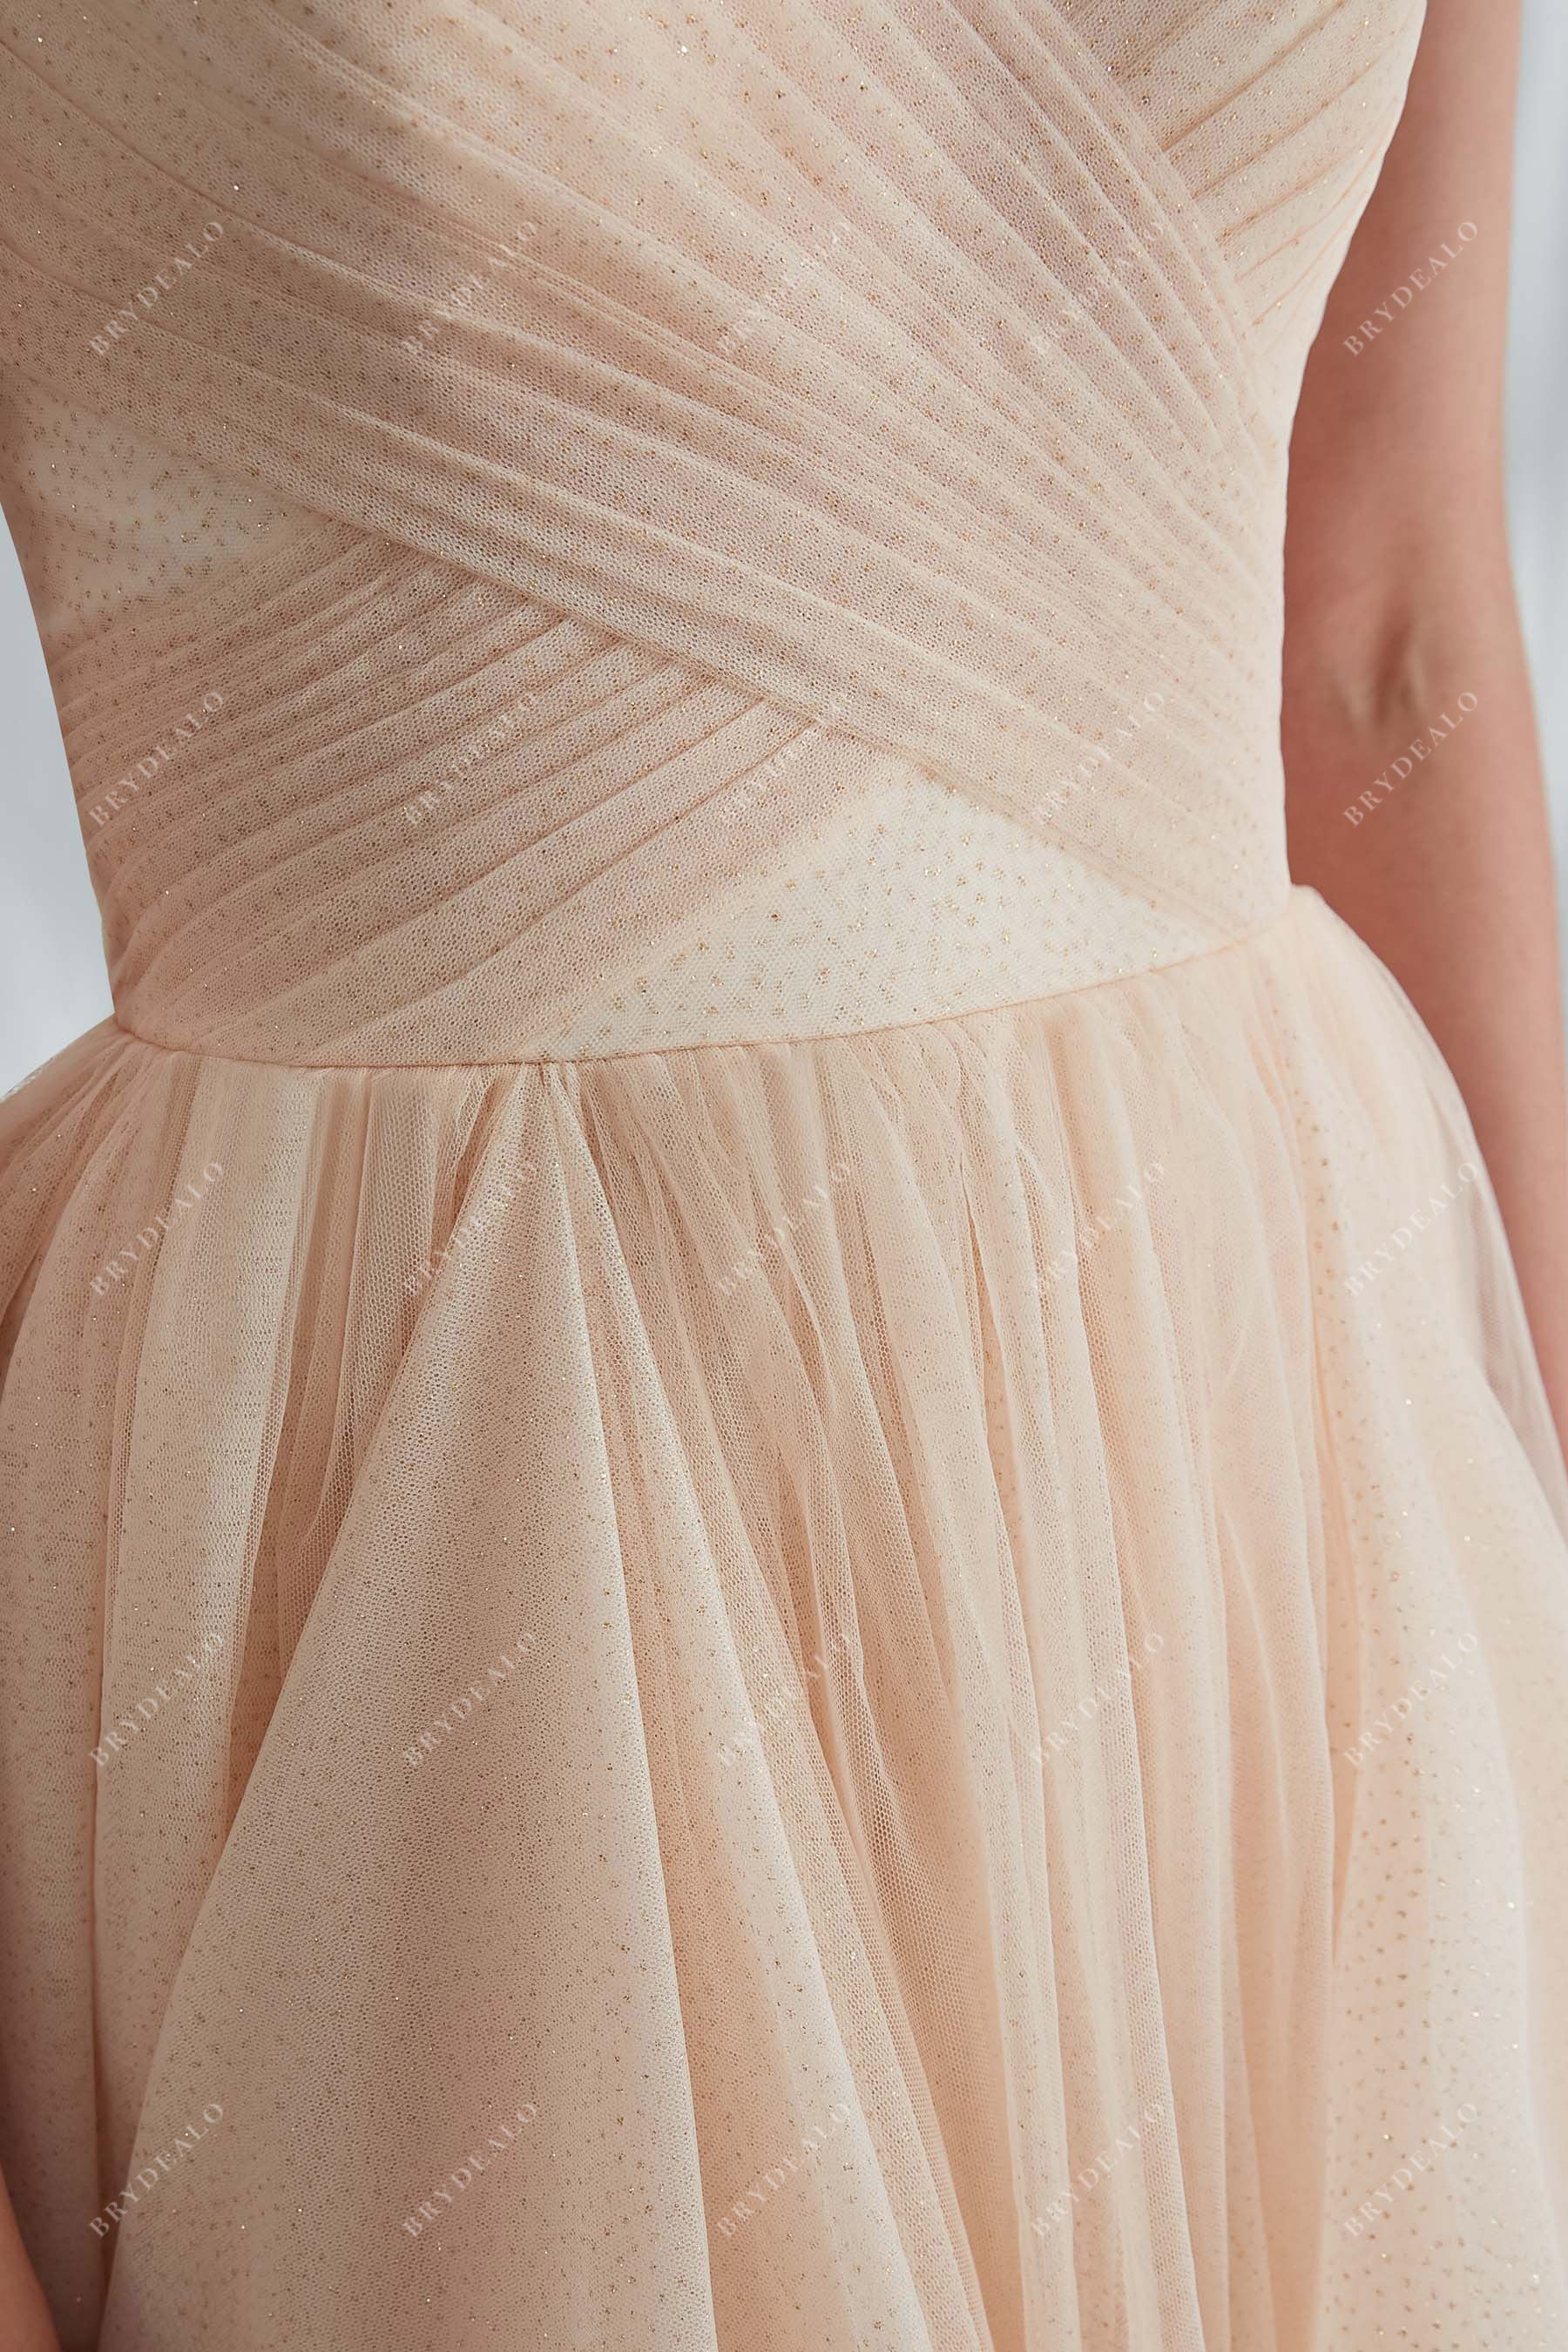 Designer Shimmery Champagne Tulle Wedding Ballgown